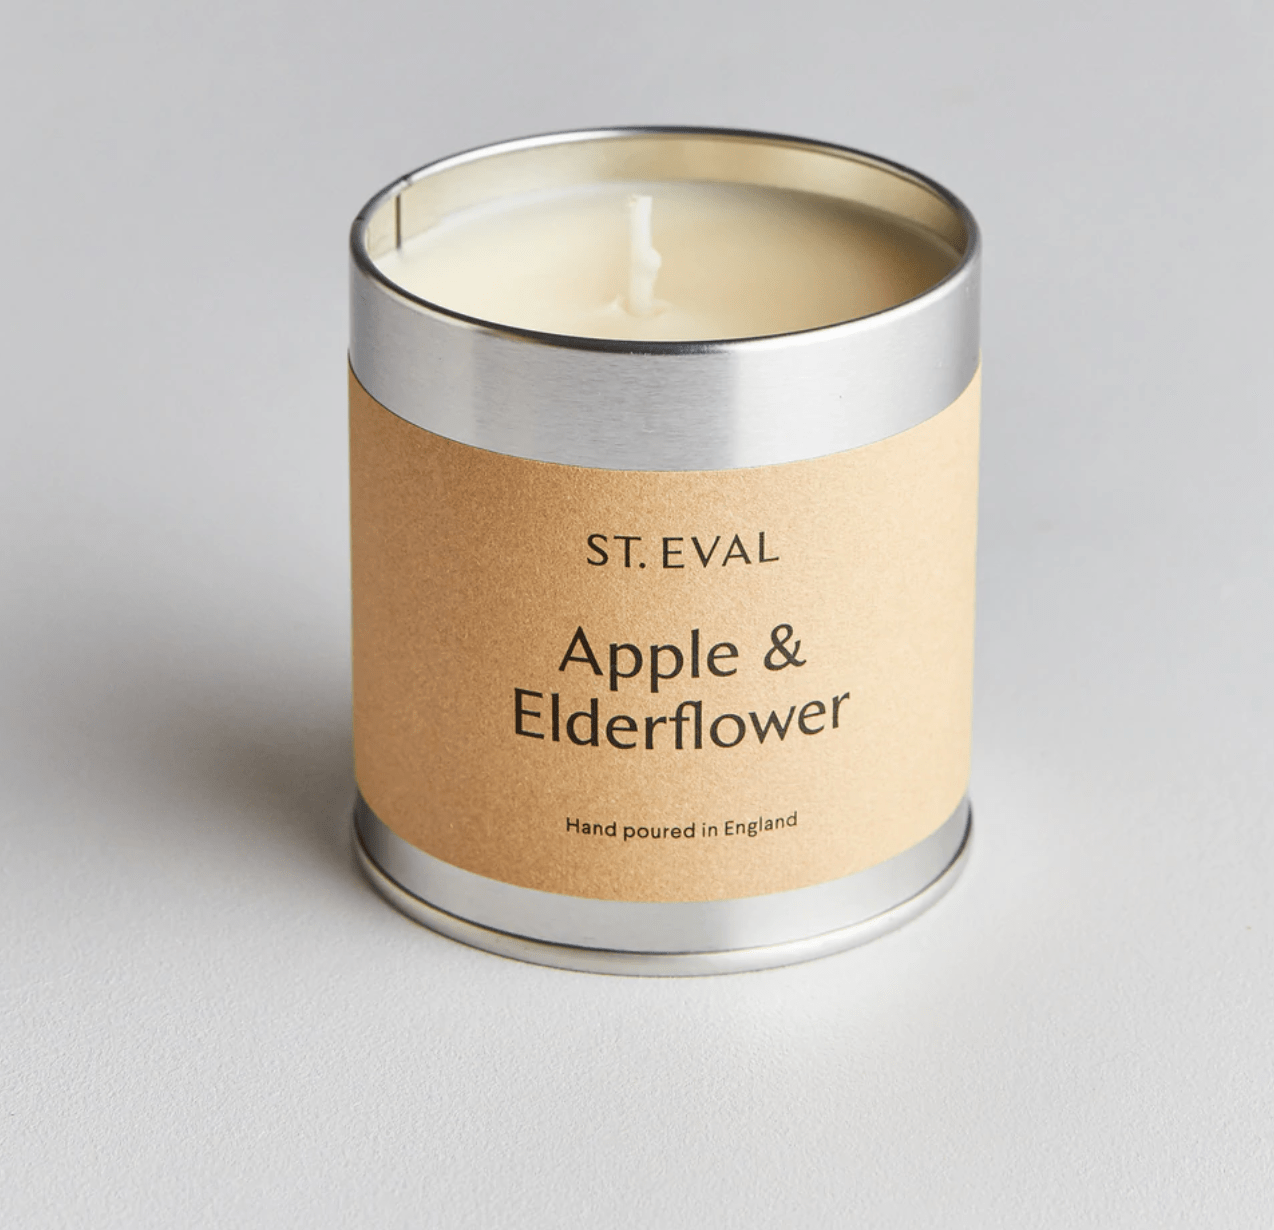 St.Eval Apple & Elderflower Scented Tin Candle 